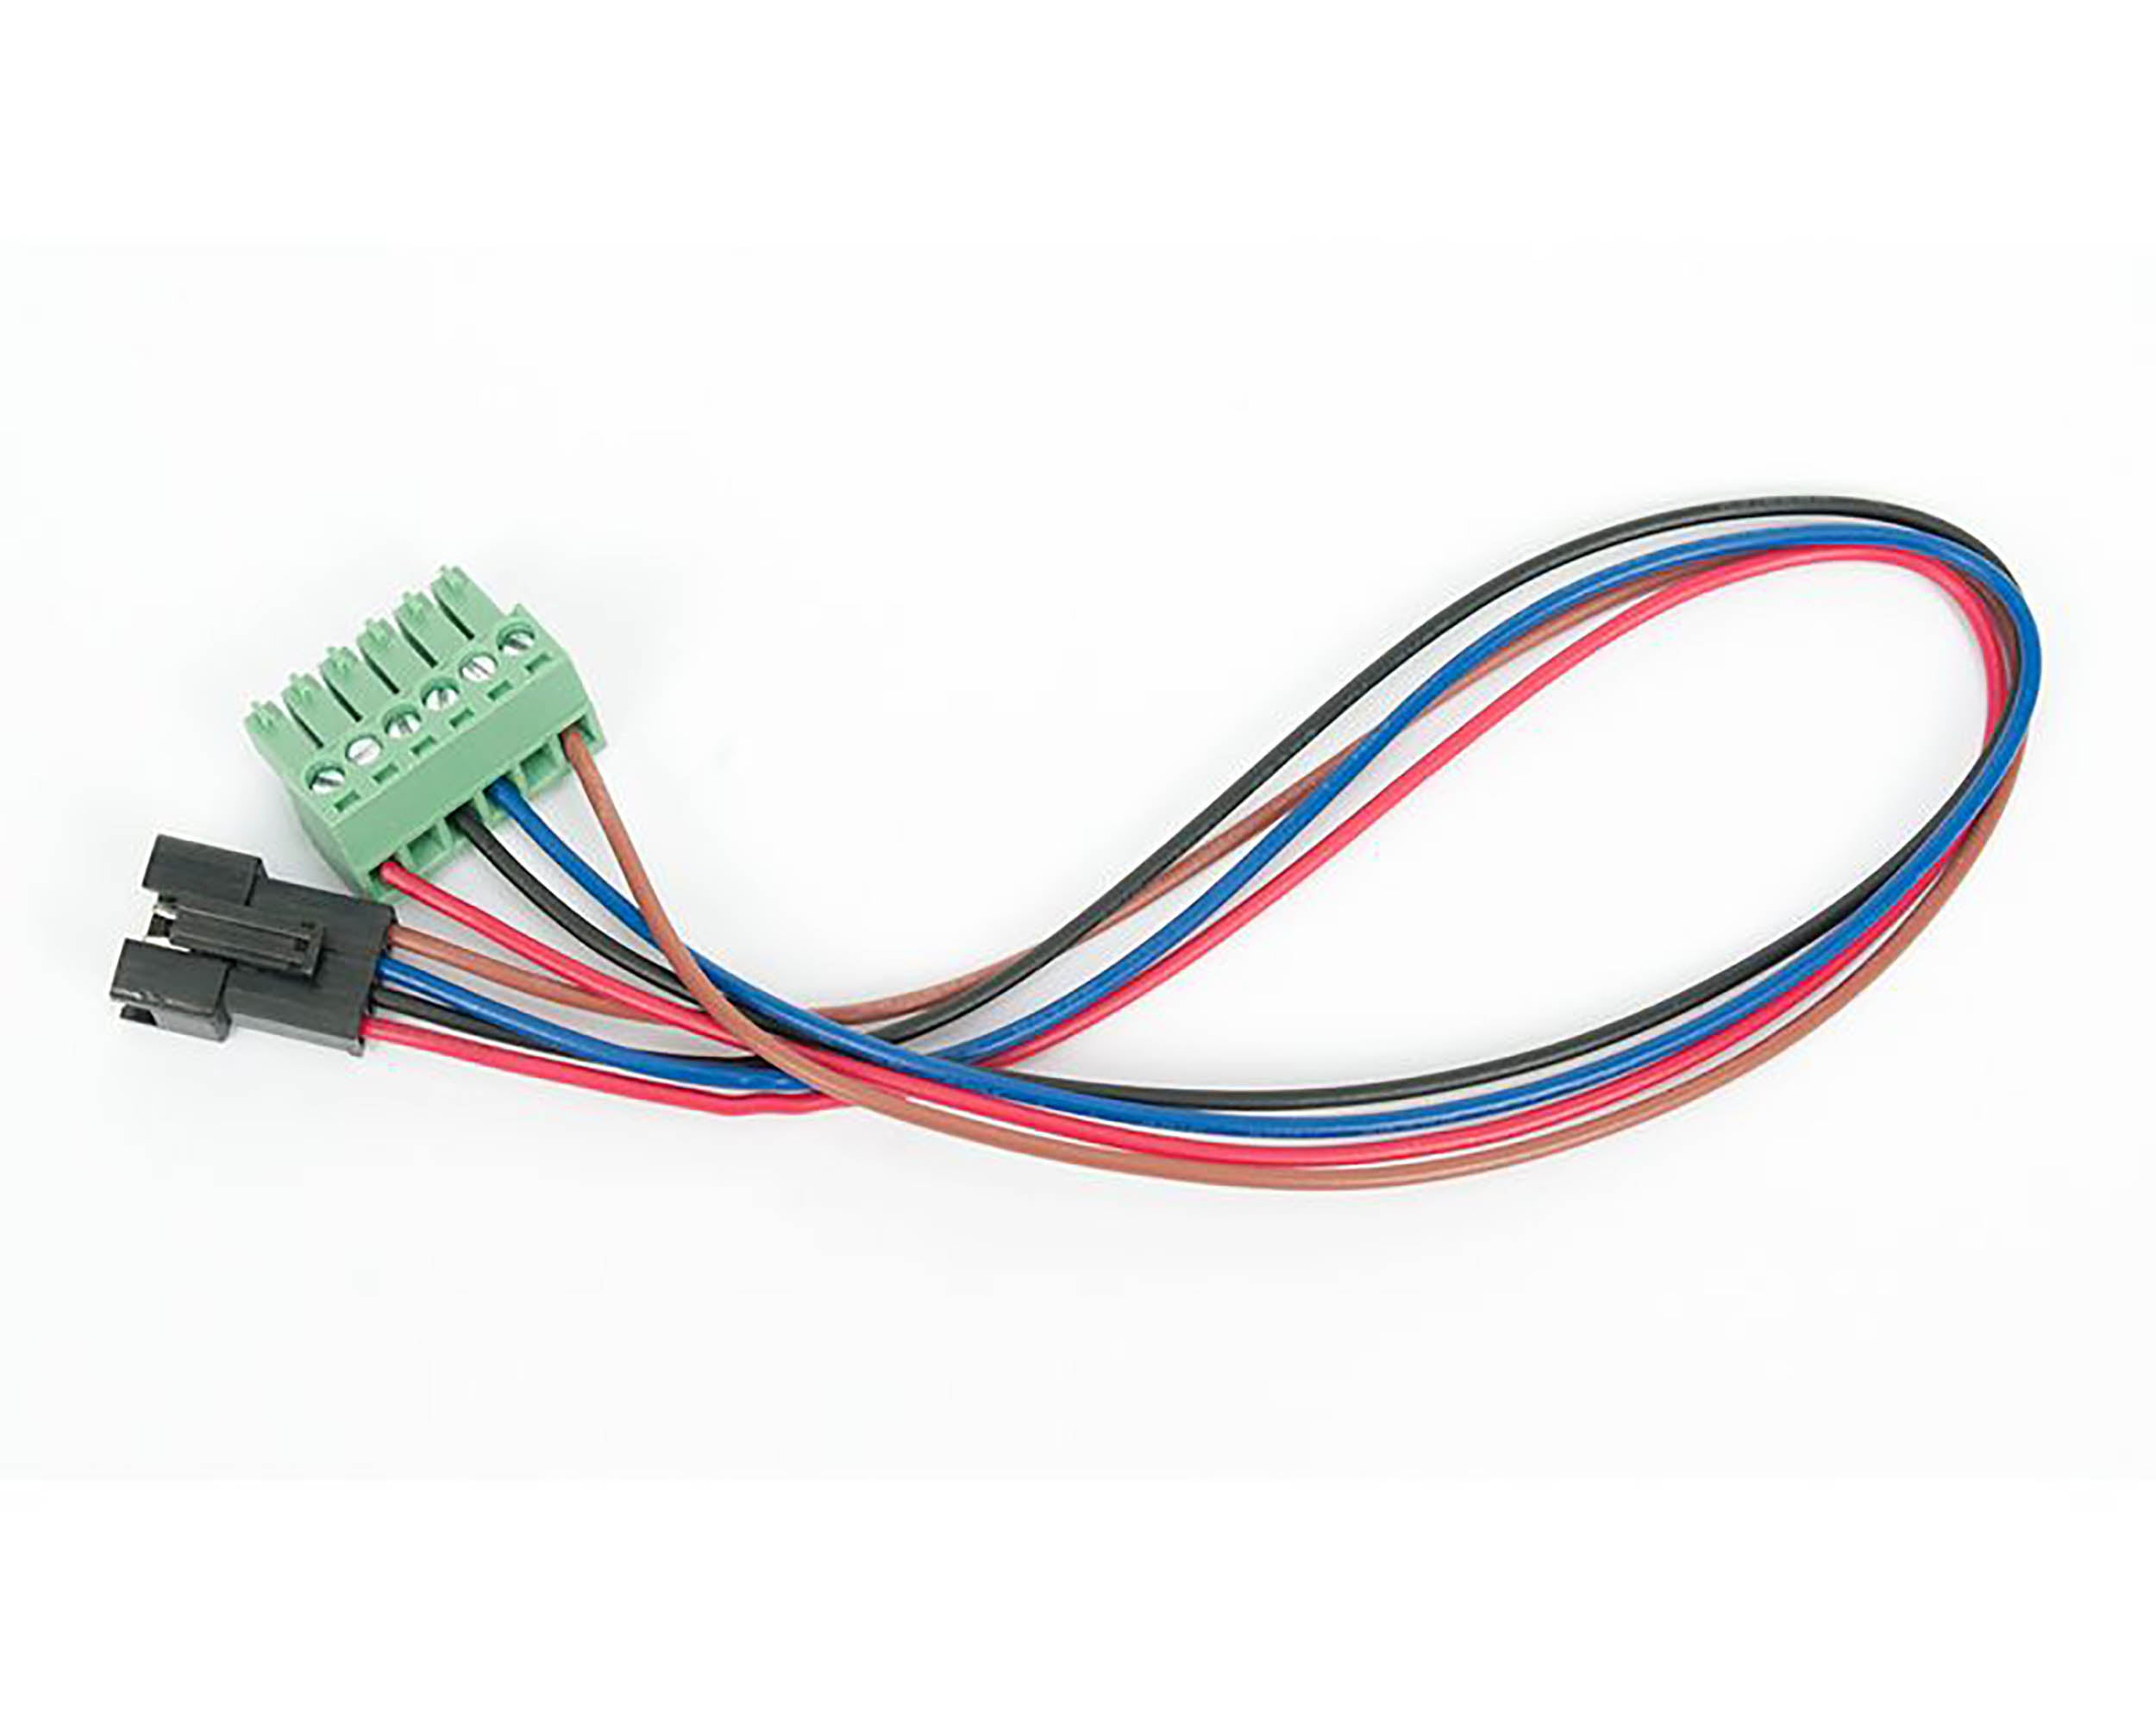 ADJ EZK-FPTC30, Adapter Cable for EZ Kling - 30 cm by ADJ